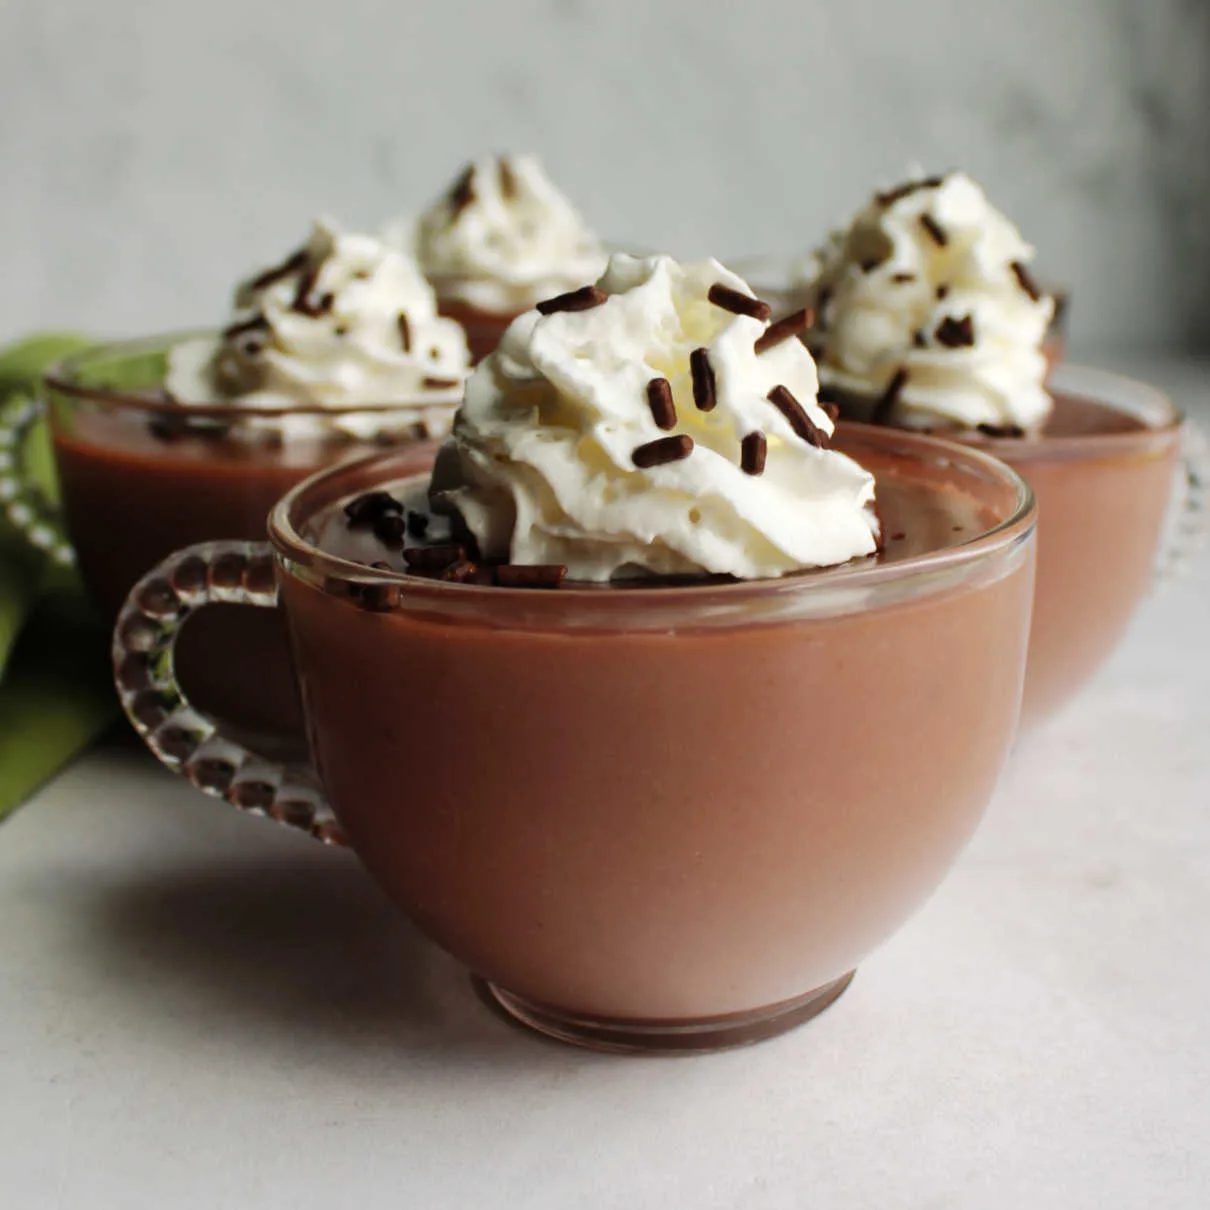 https://cookingwithcarlee.com/wp-content/uploads/2022/08/glass-mug-of-hot-chocolate-pudding.jpg.webp